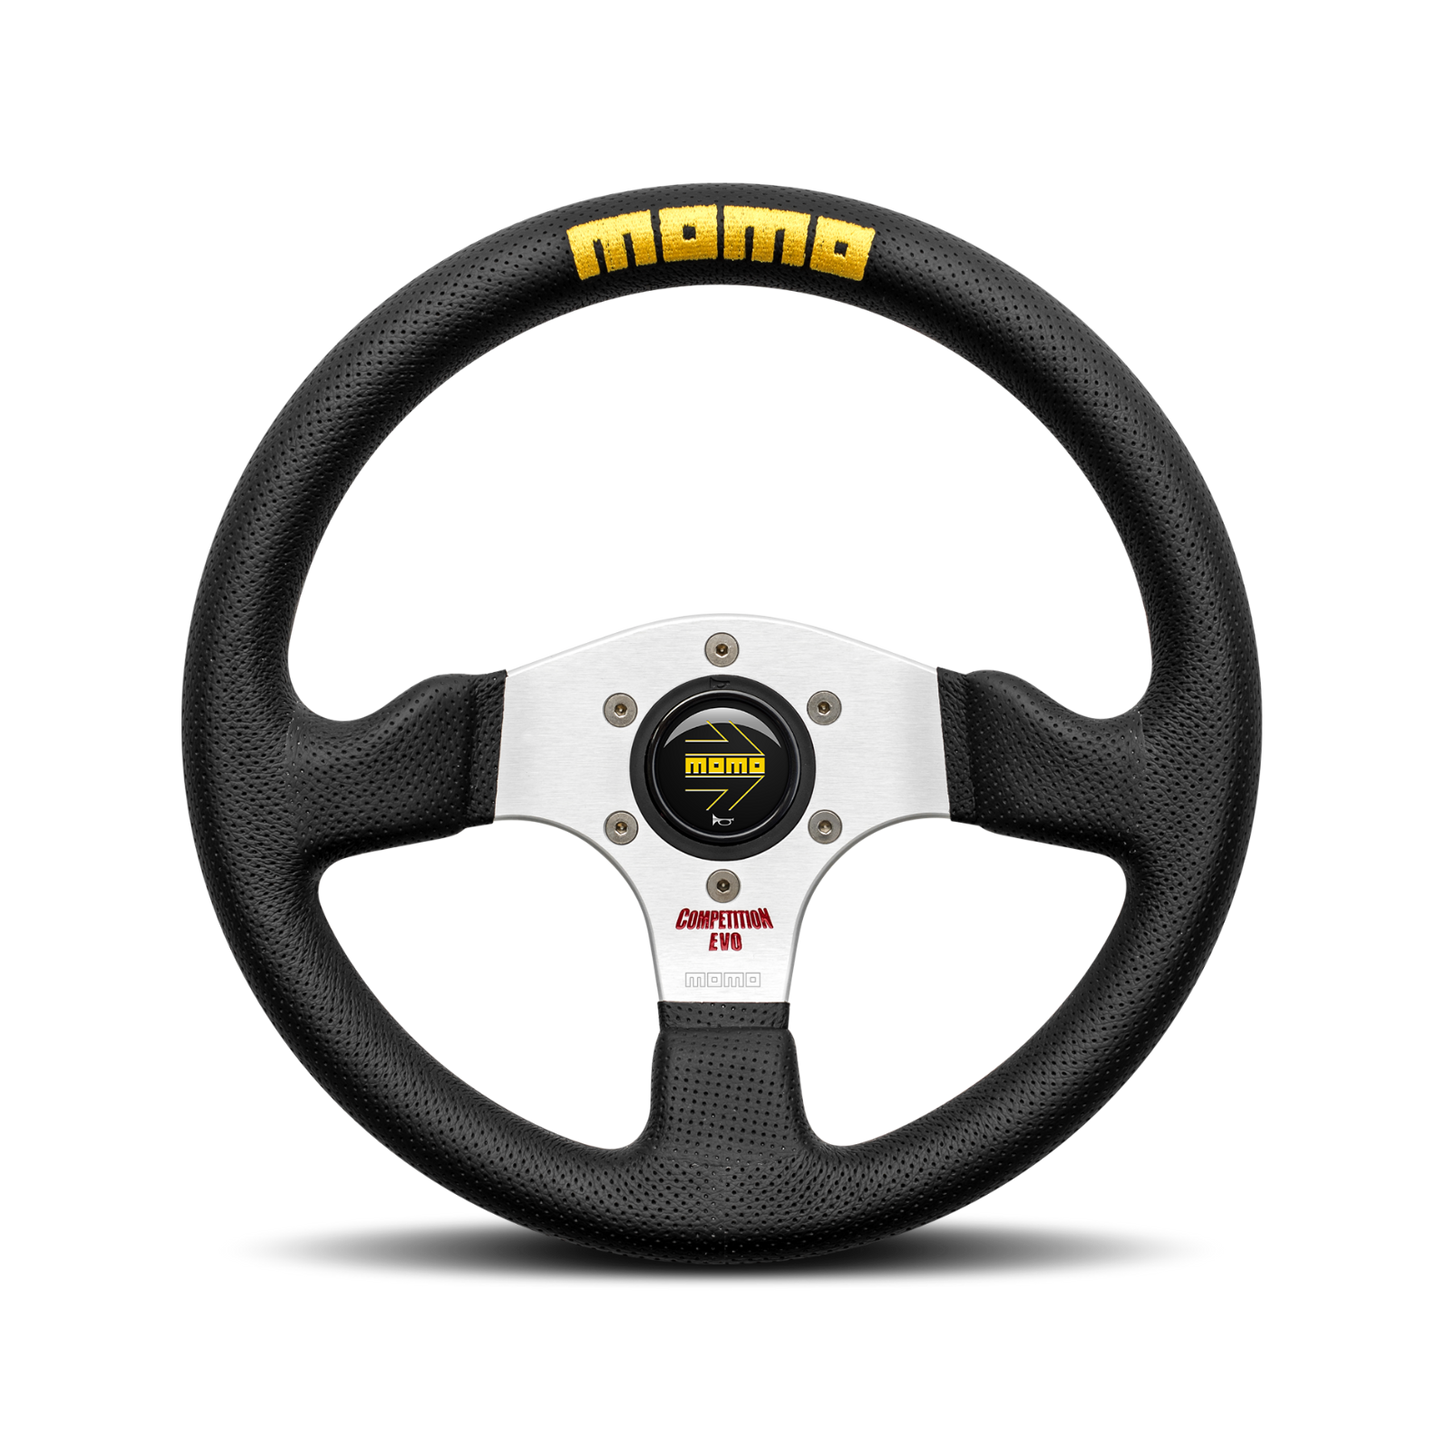 Momo Steering wheel (street) - COMPETITION EVO - BLACK LEATHER Ø320mm